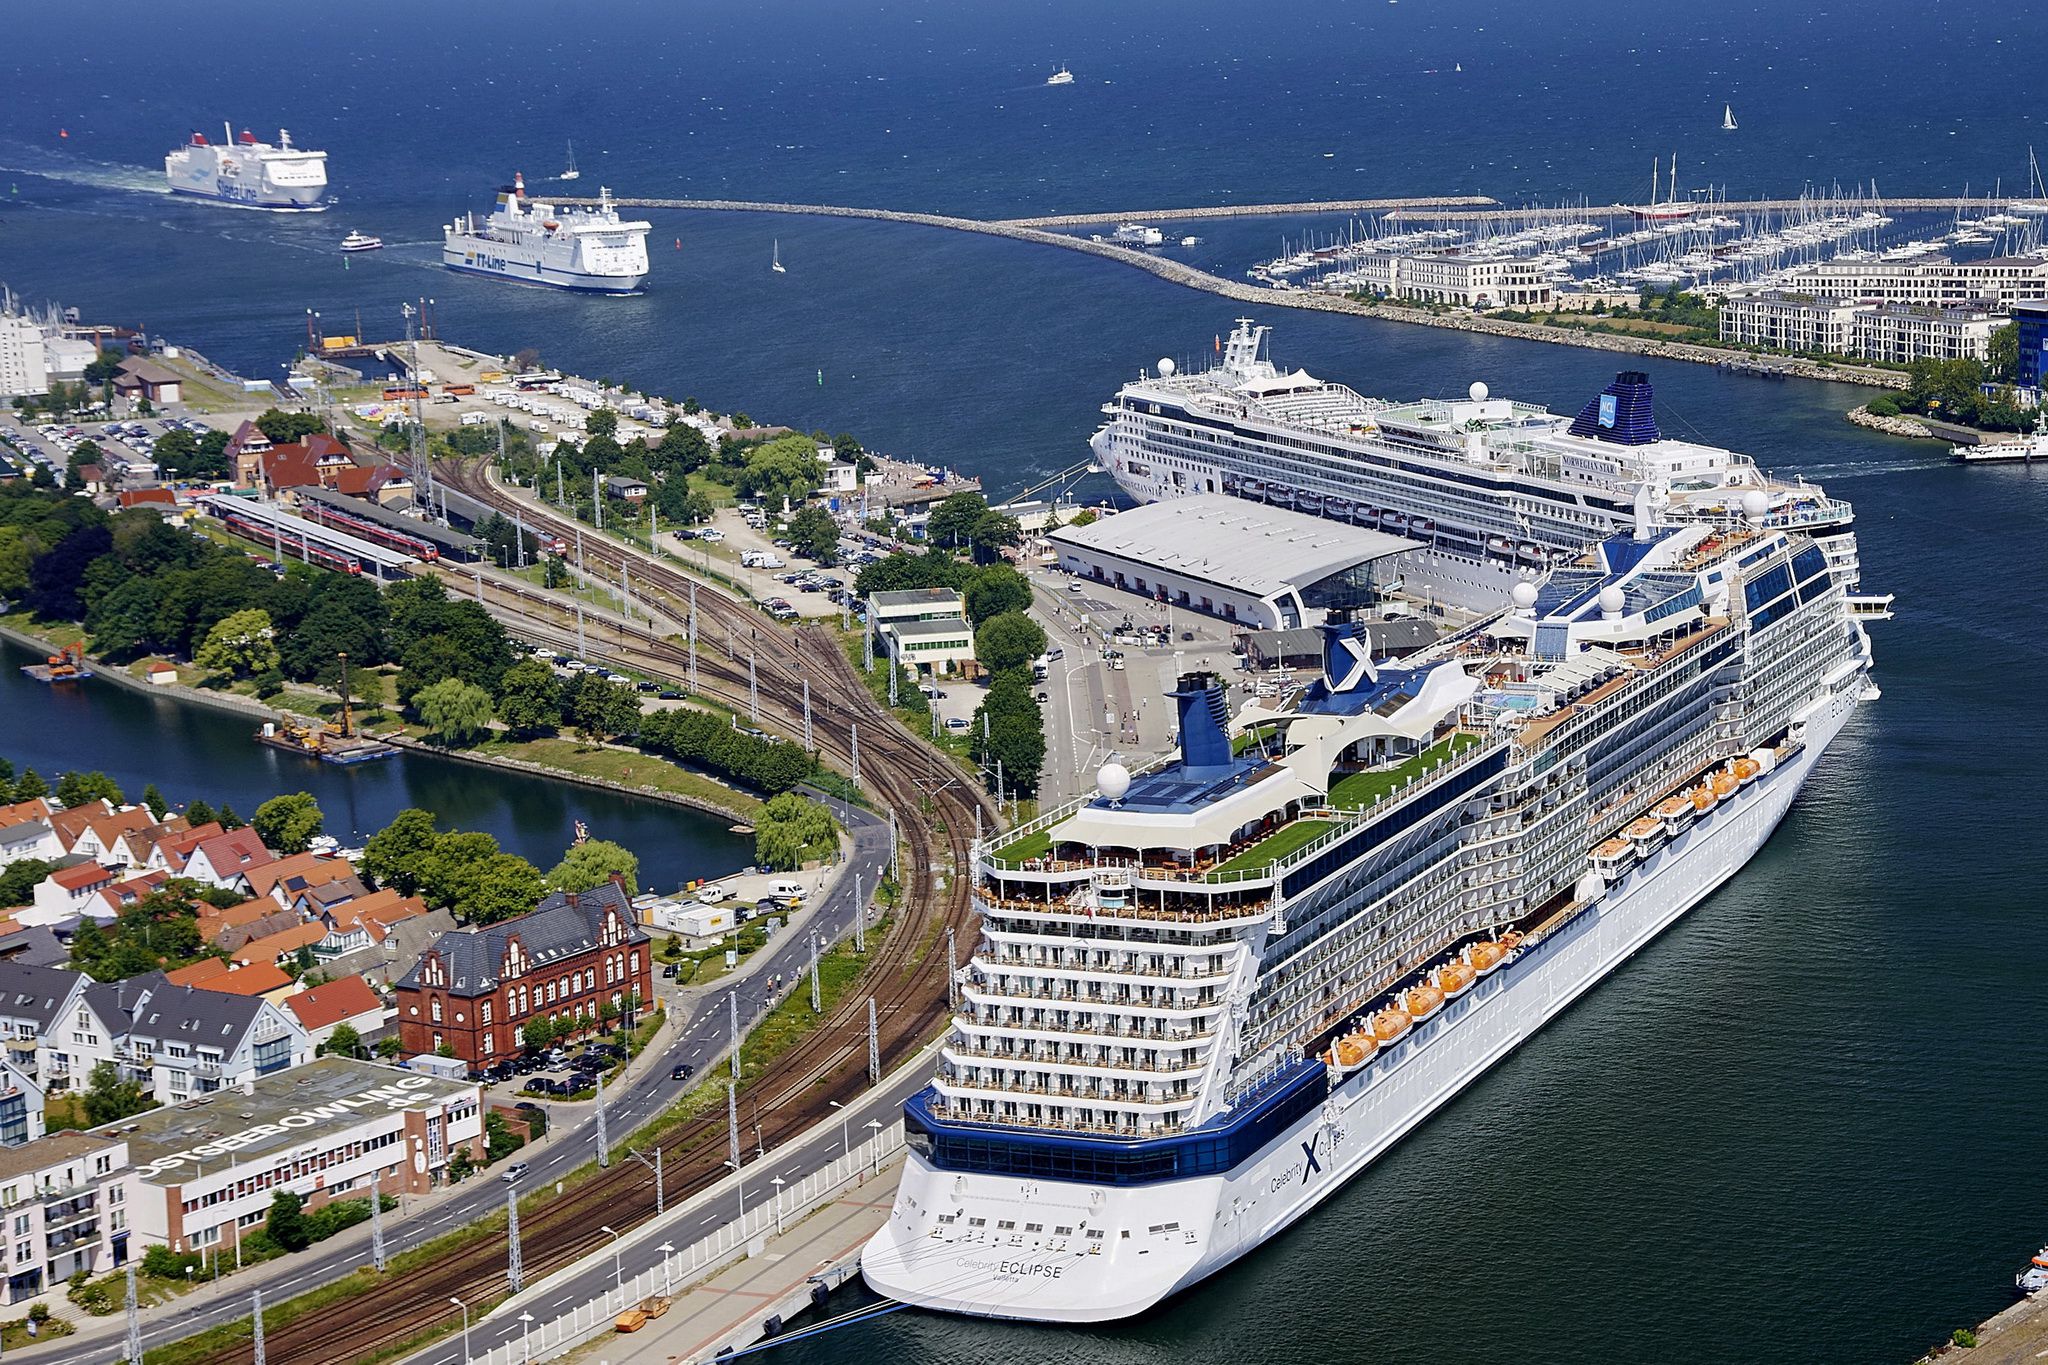 Southampton Cruise Seaport: